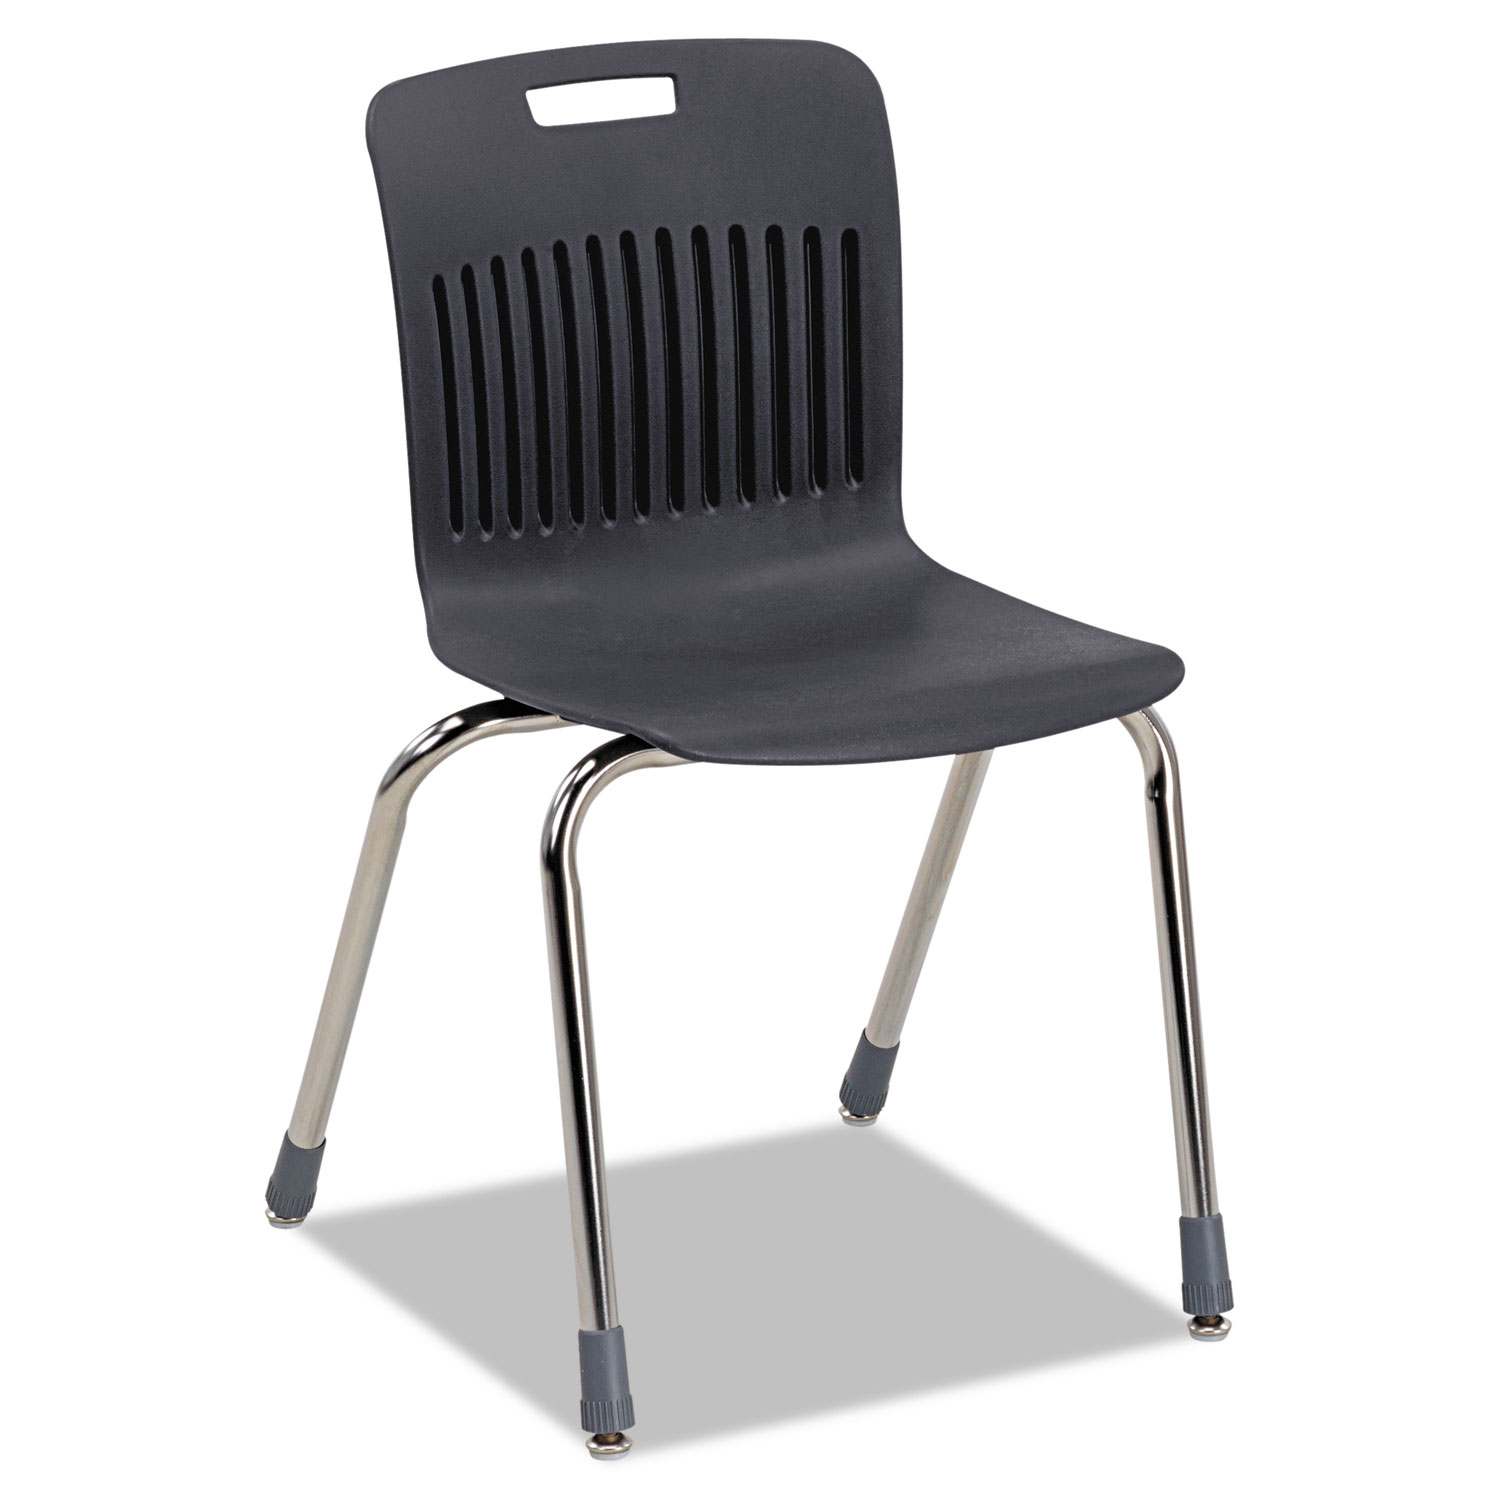 Analogy Ergonomic Stack Chair, Black/Chrome, 4/Carton